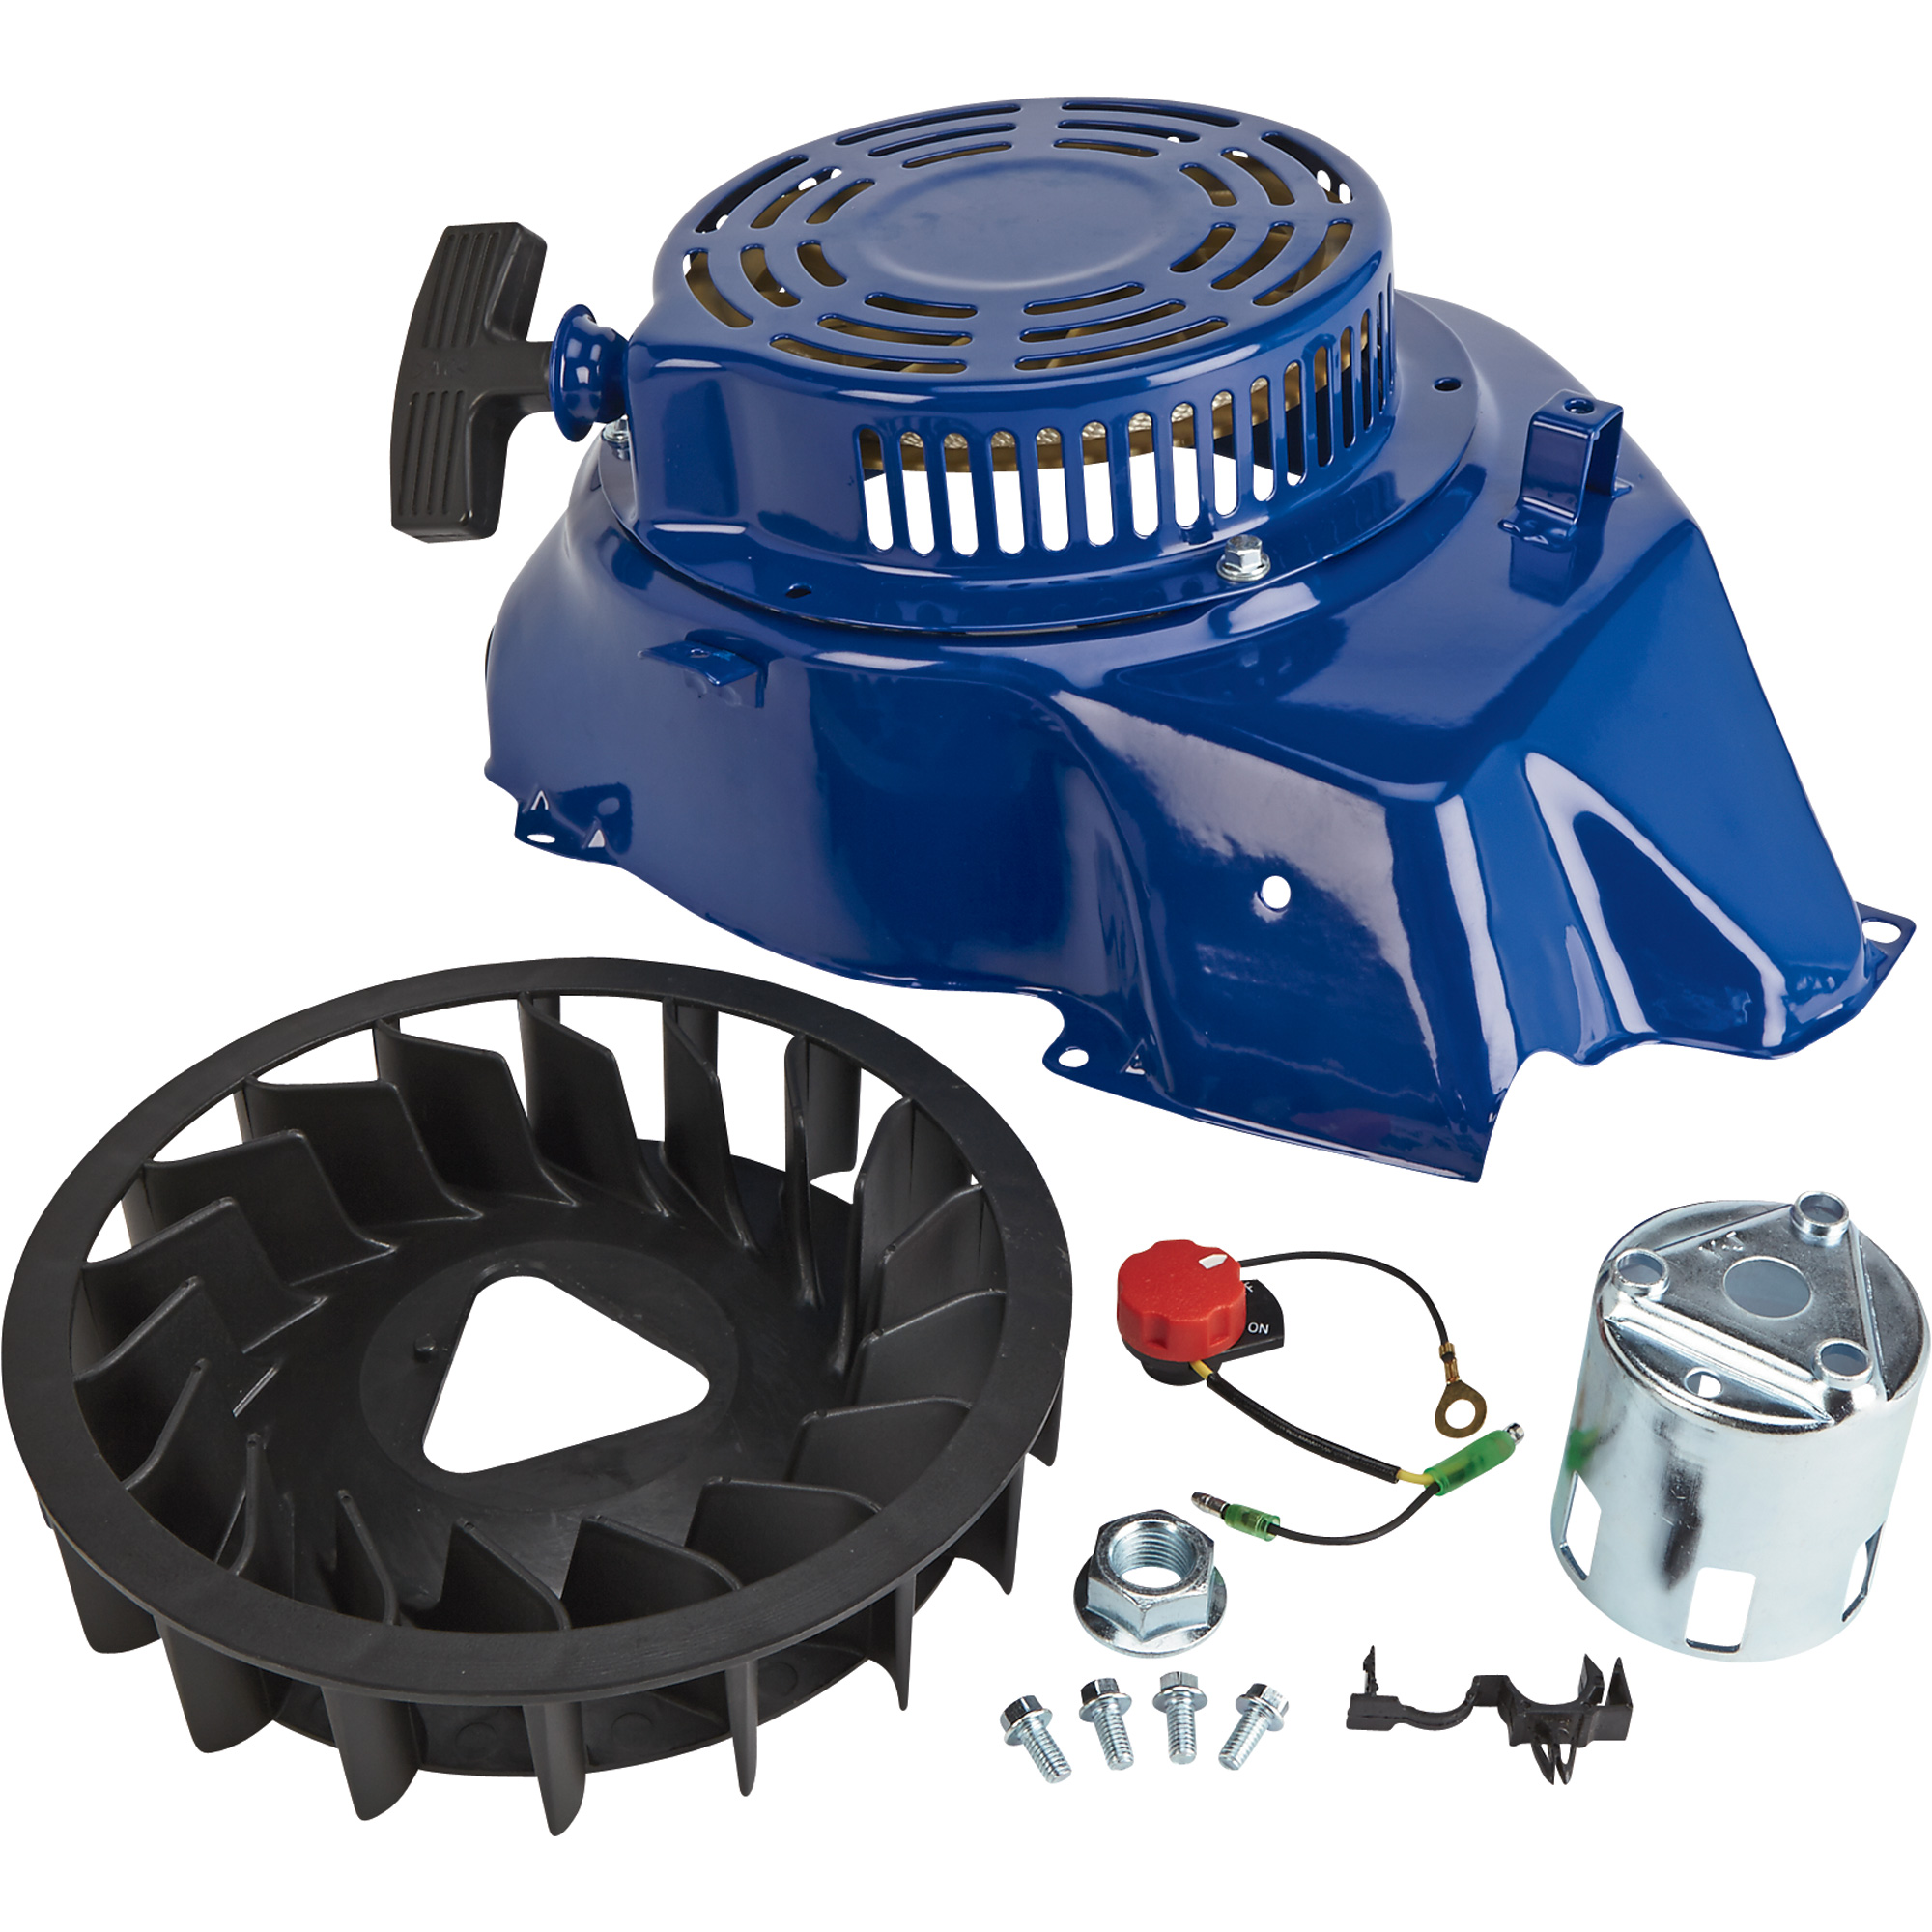 Powerhorse Recoil Replacement Kit for Item# 45750, Powerhorse 420cc OHV Horizontal Engine